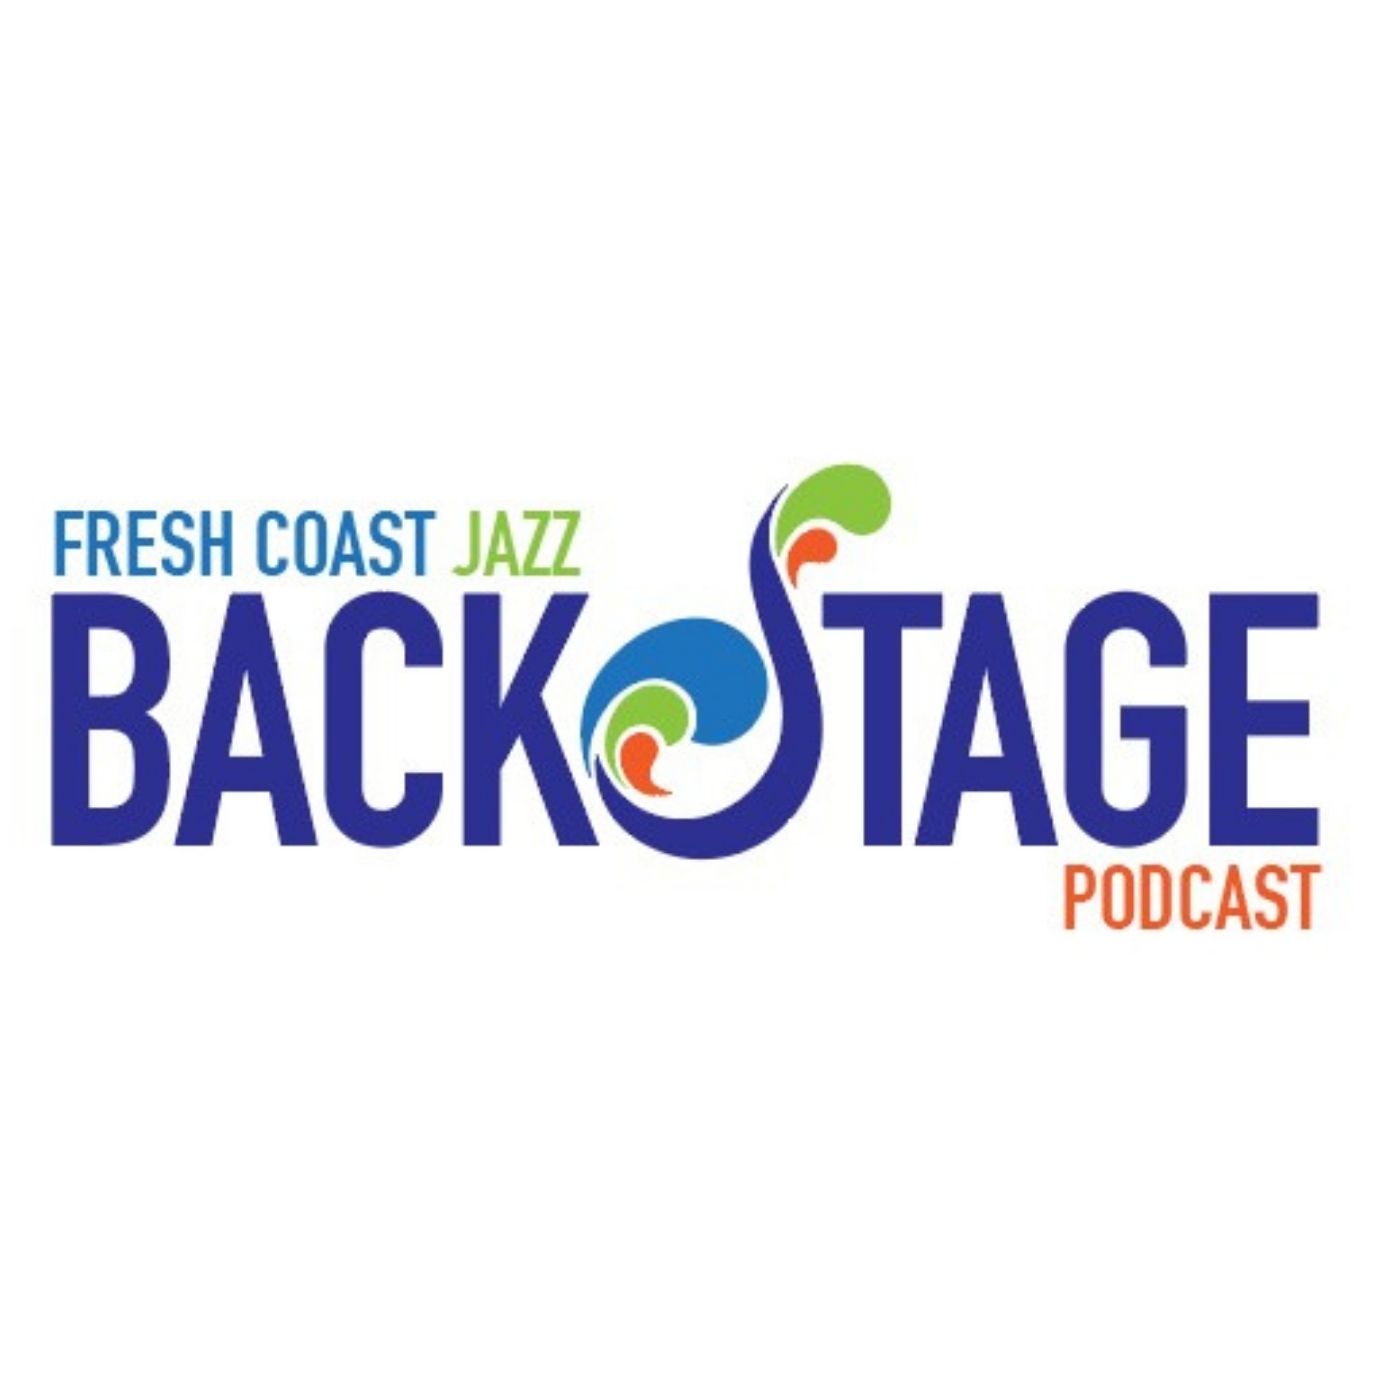 Artwork for podcast Fresh Coast Jazz Backstage